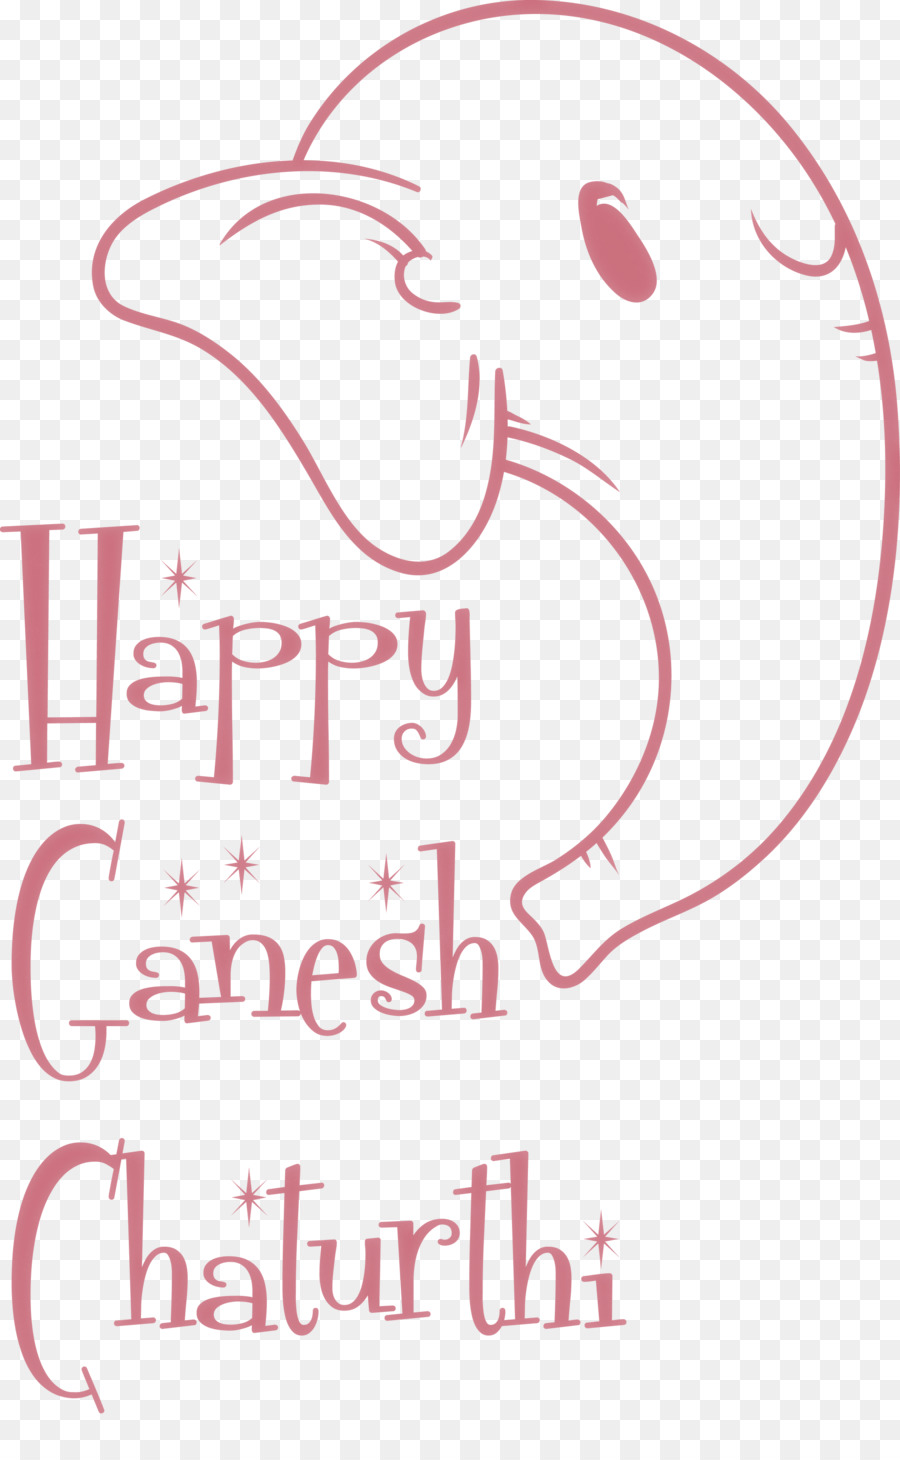 Ganesh Chaturthi Ganesh